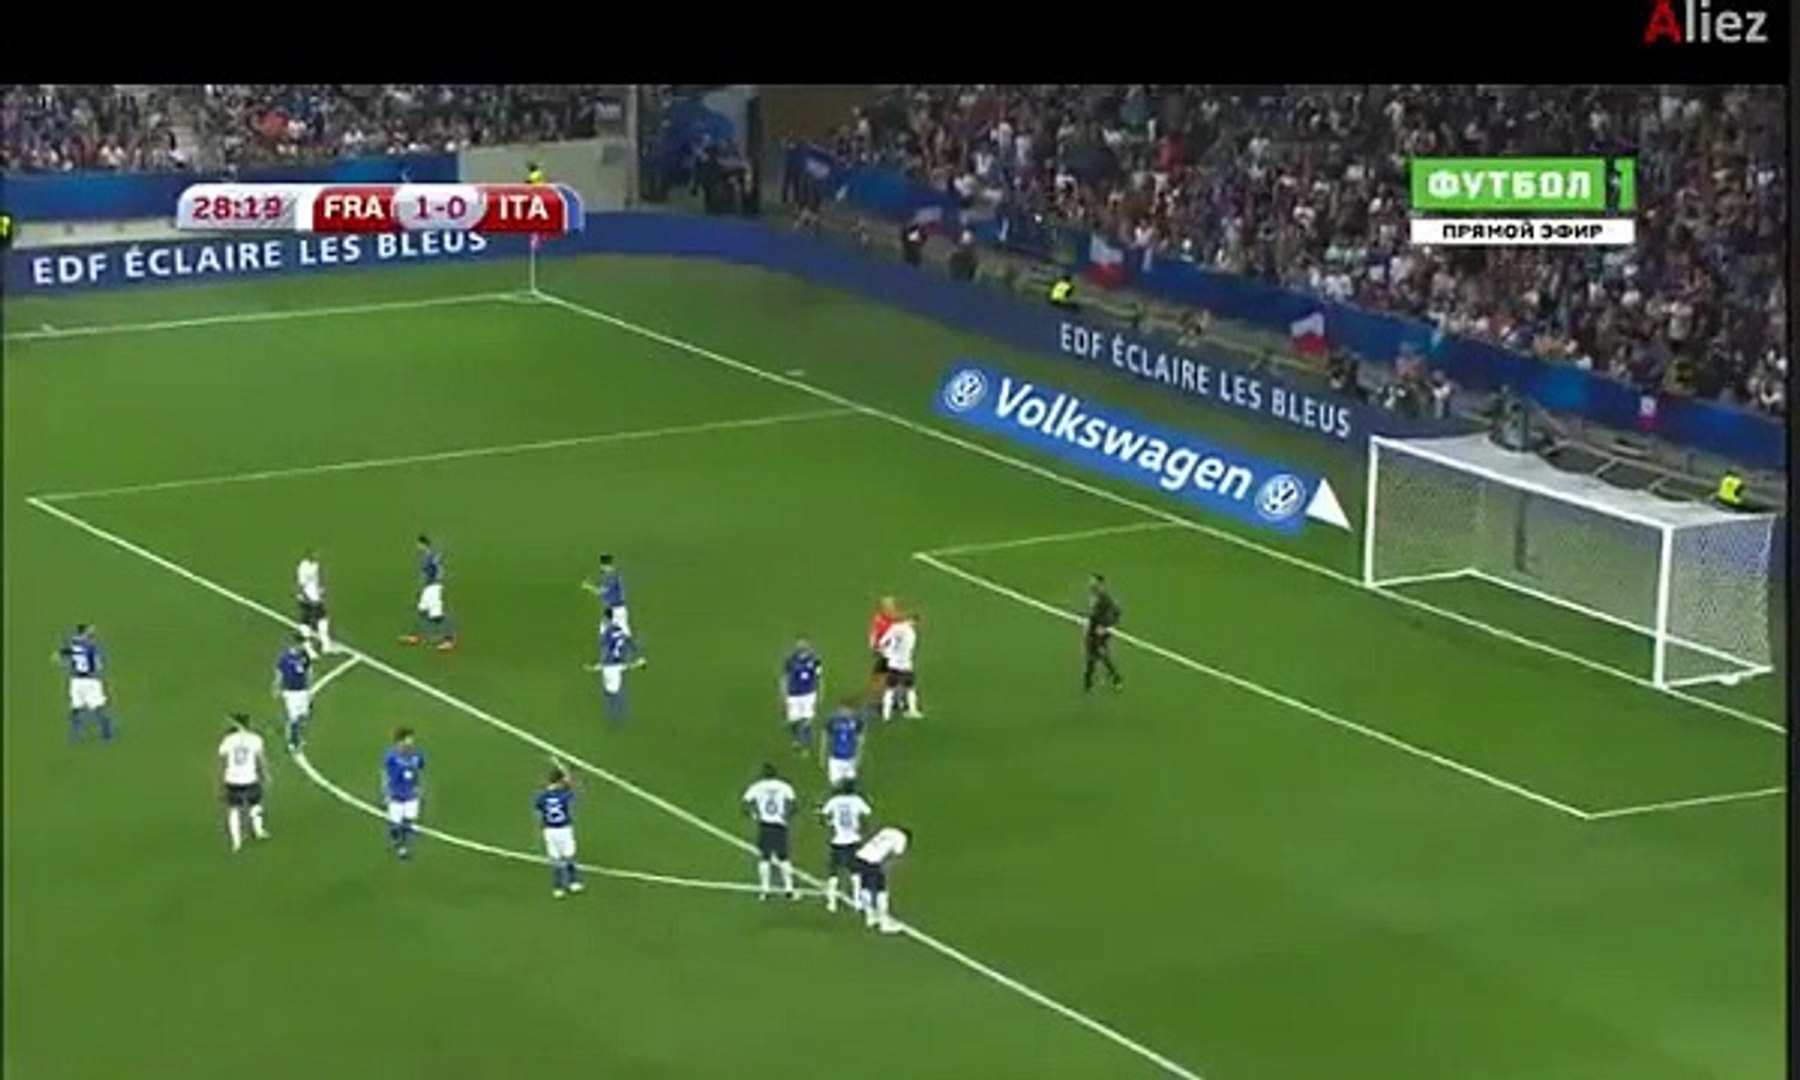 Griezmann Penalty Goal France 2-0 Italy - Vidéo Dailymotion